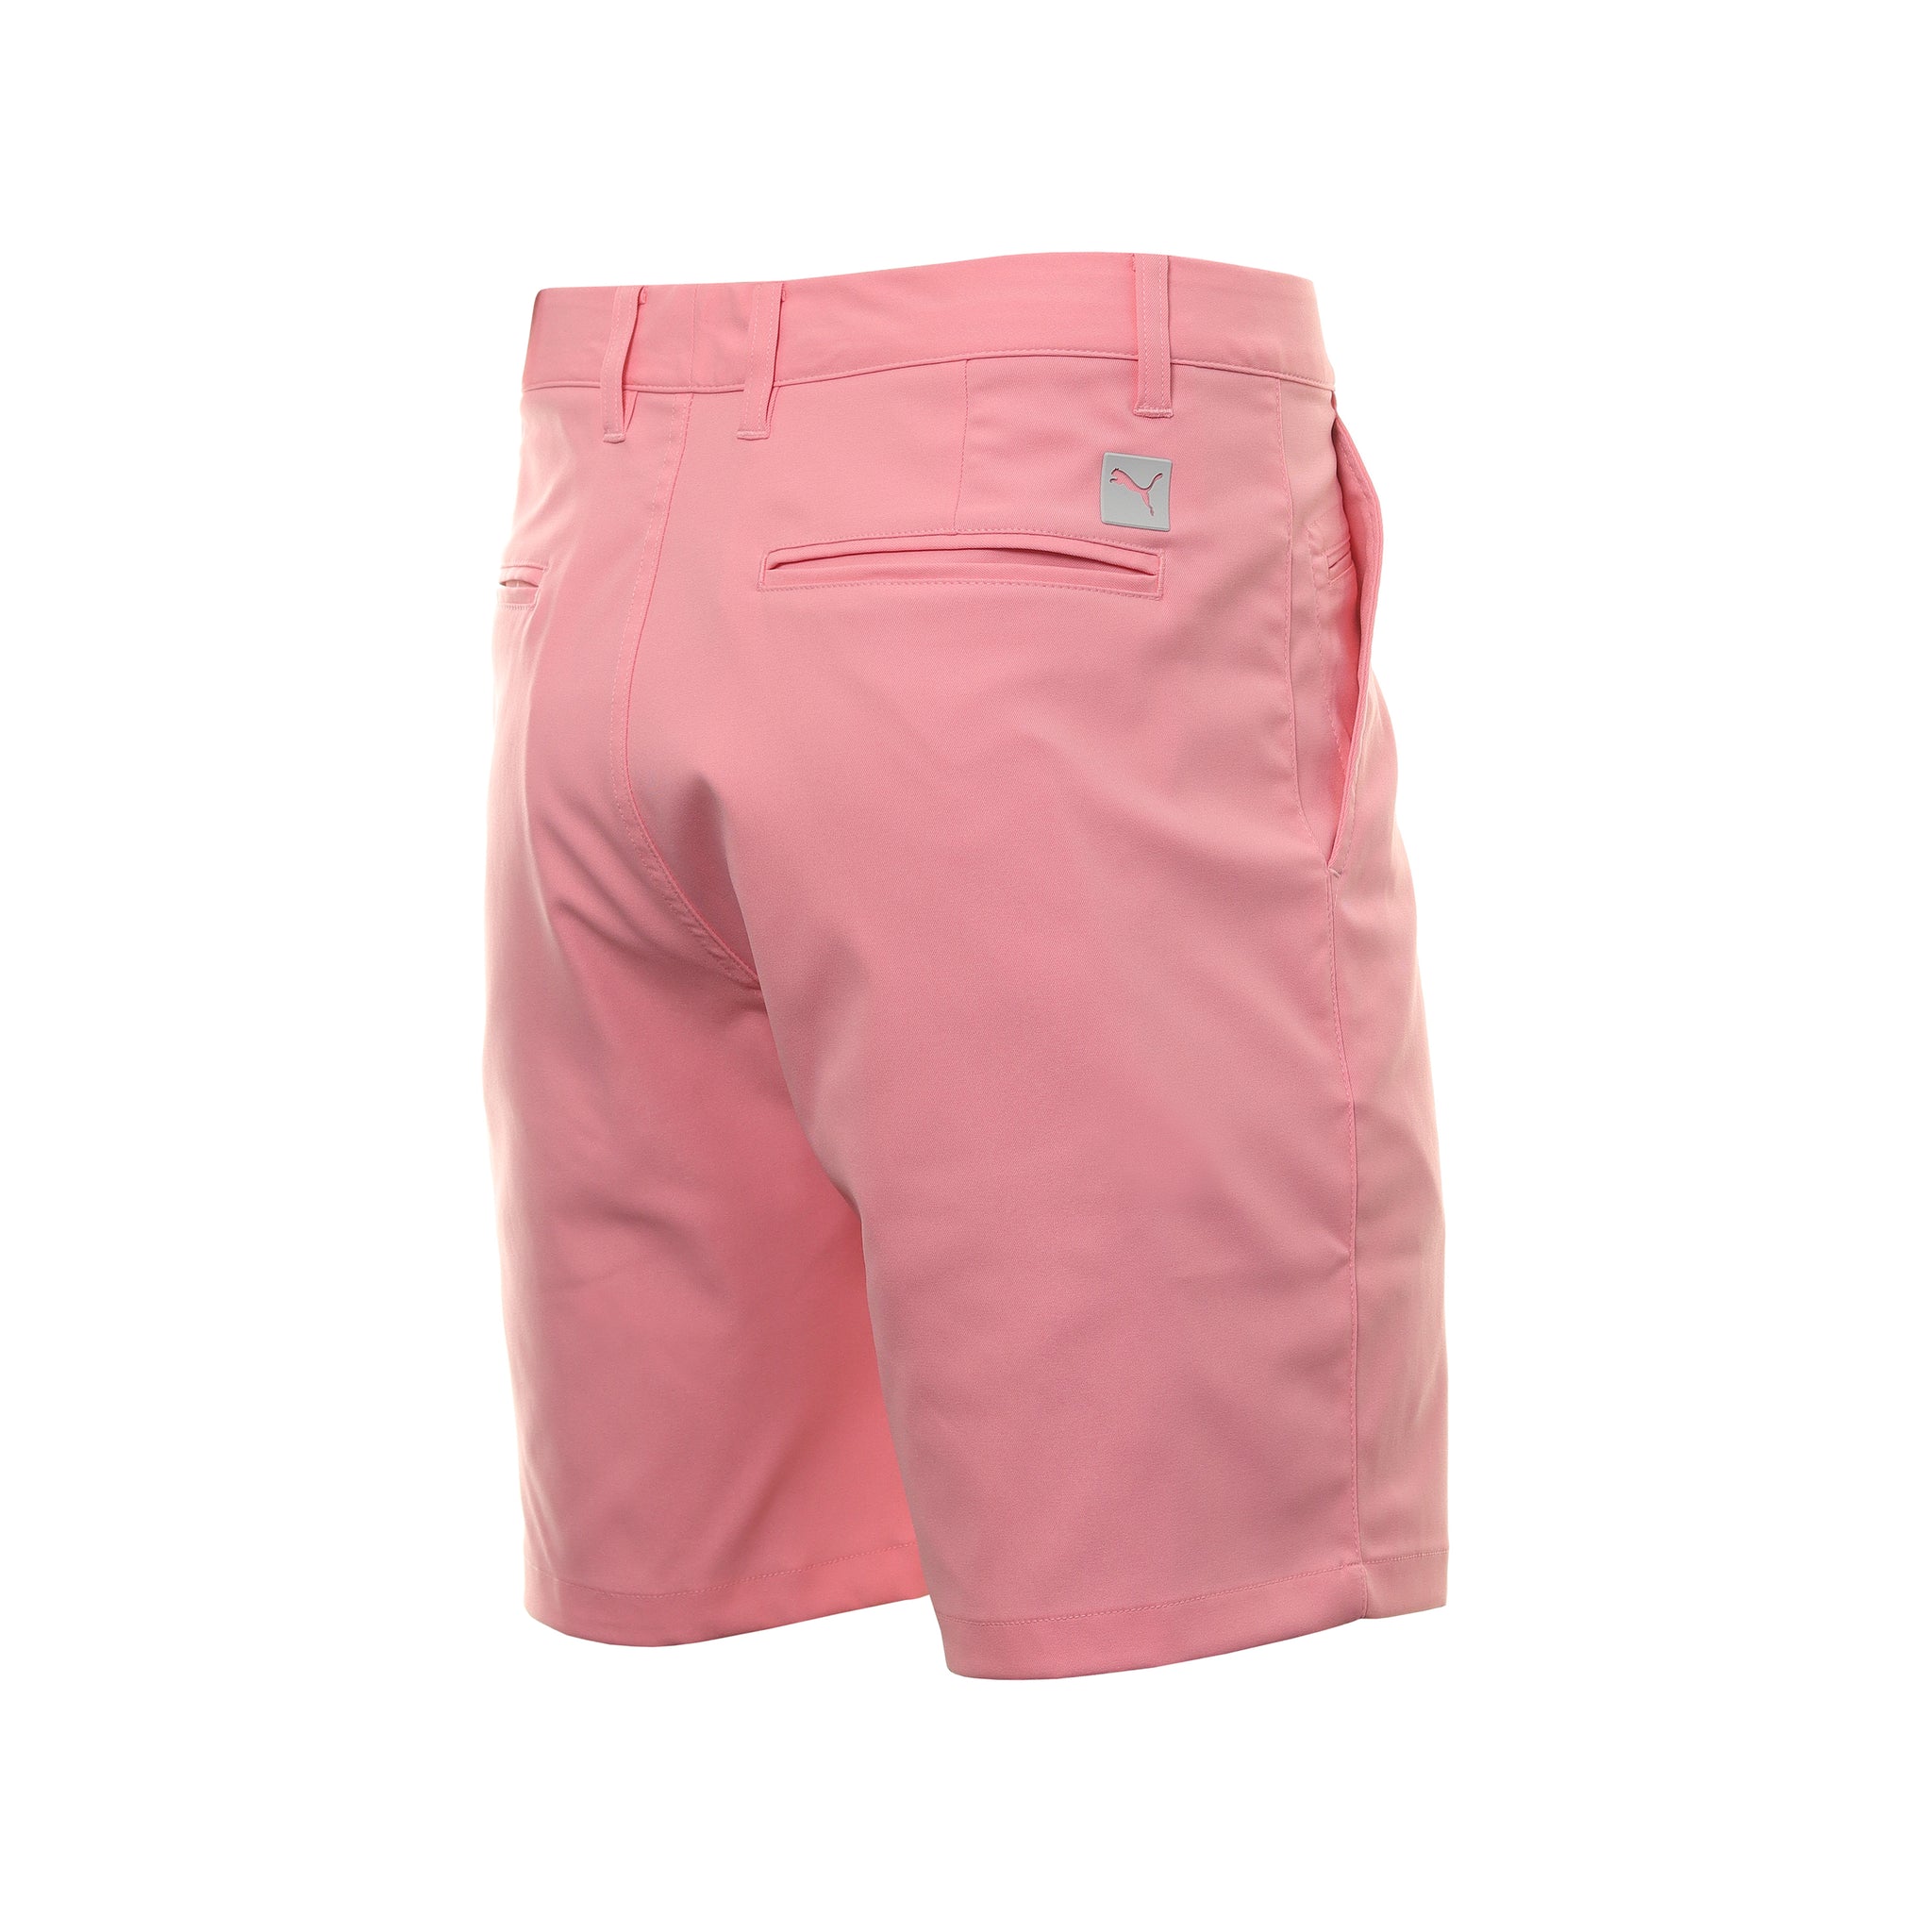 puma-golf-dealer-8-shorts-537788-ice-pink-14